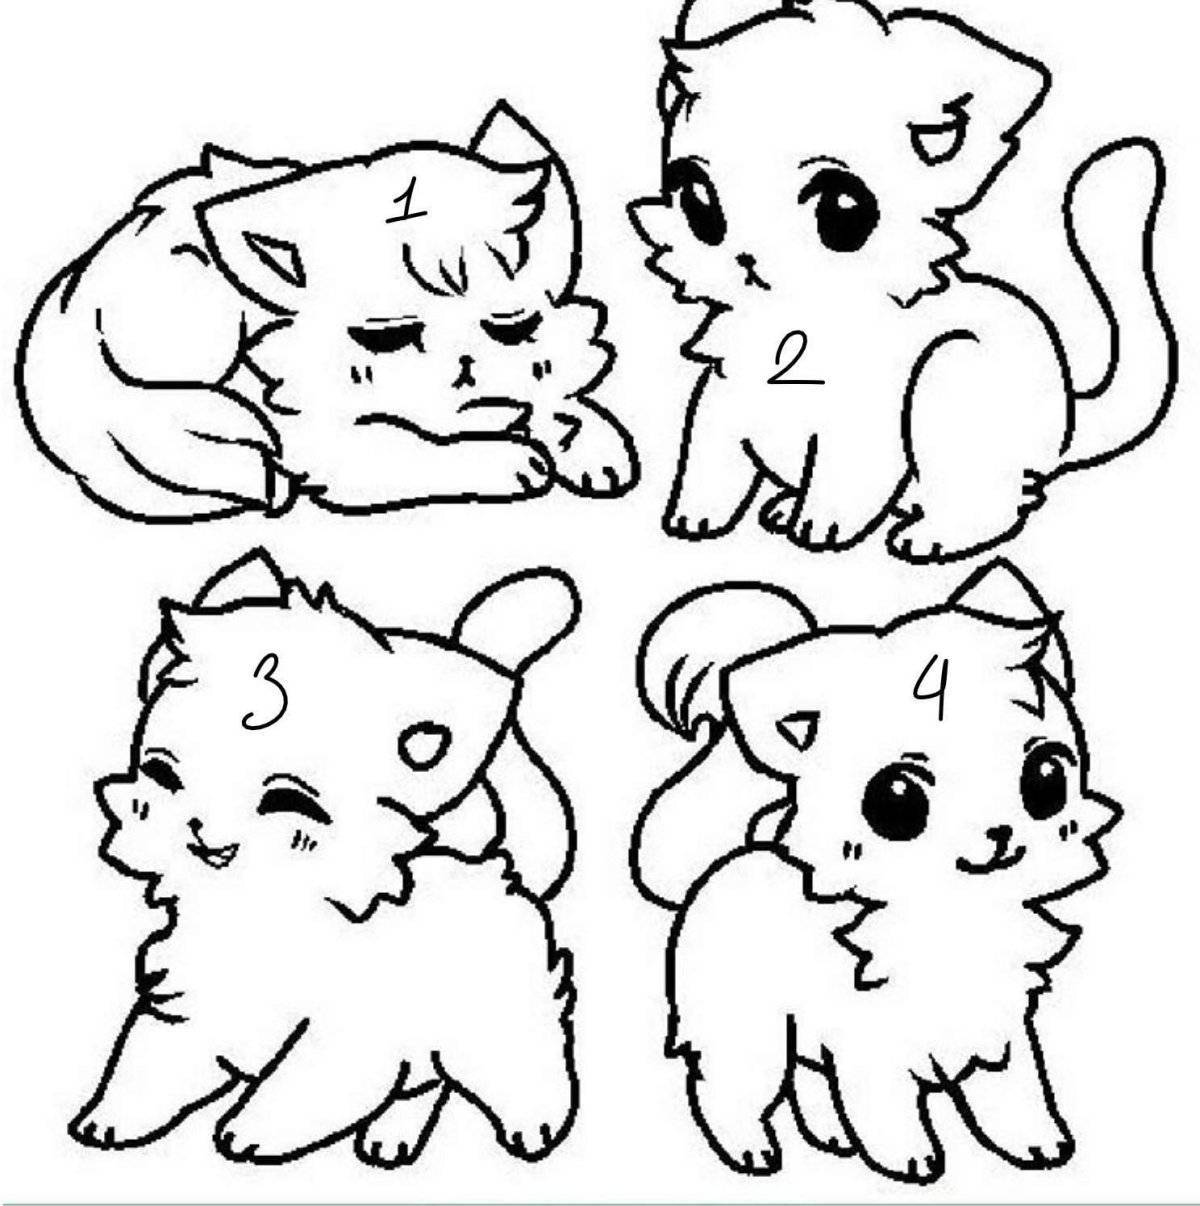 Fun coloring cute animals